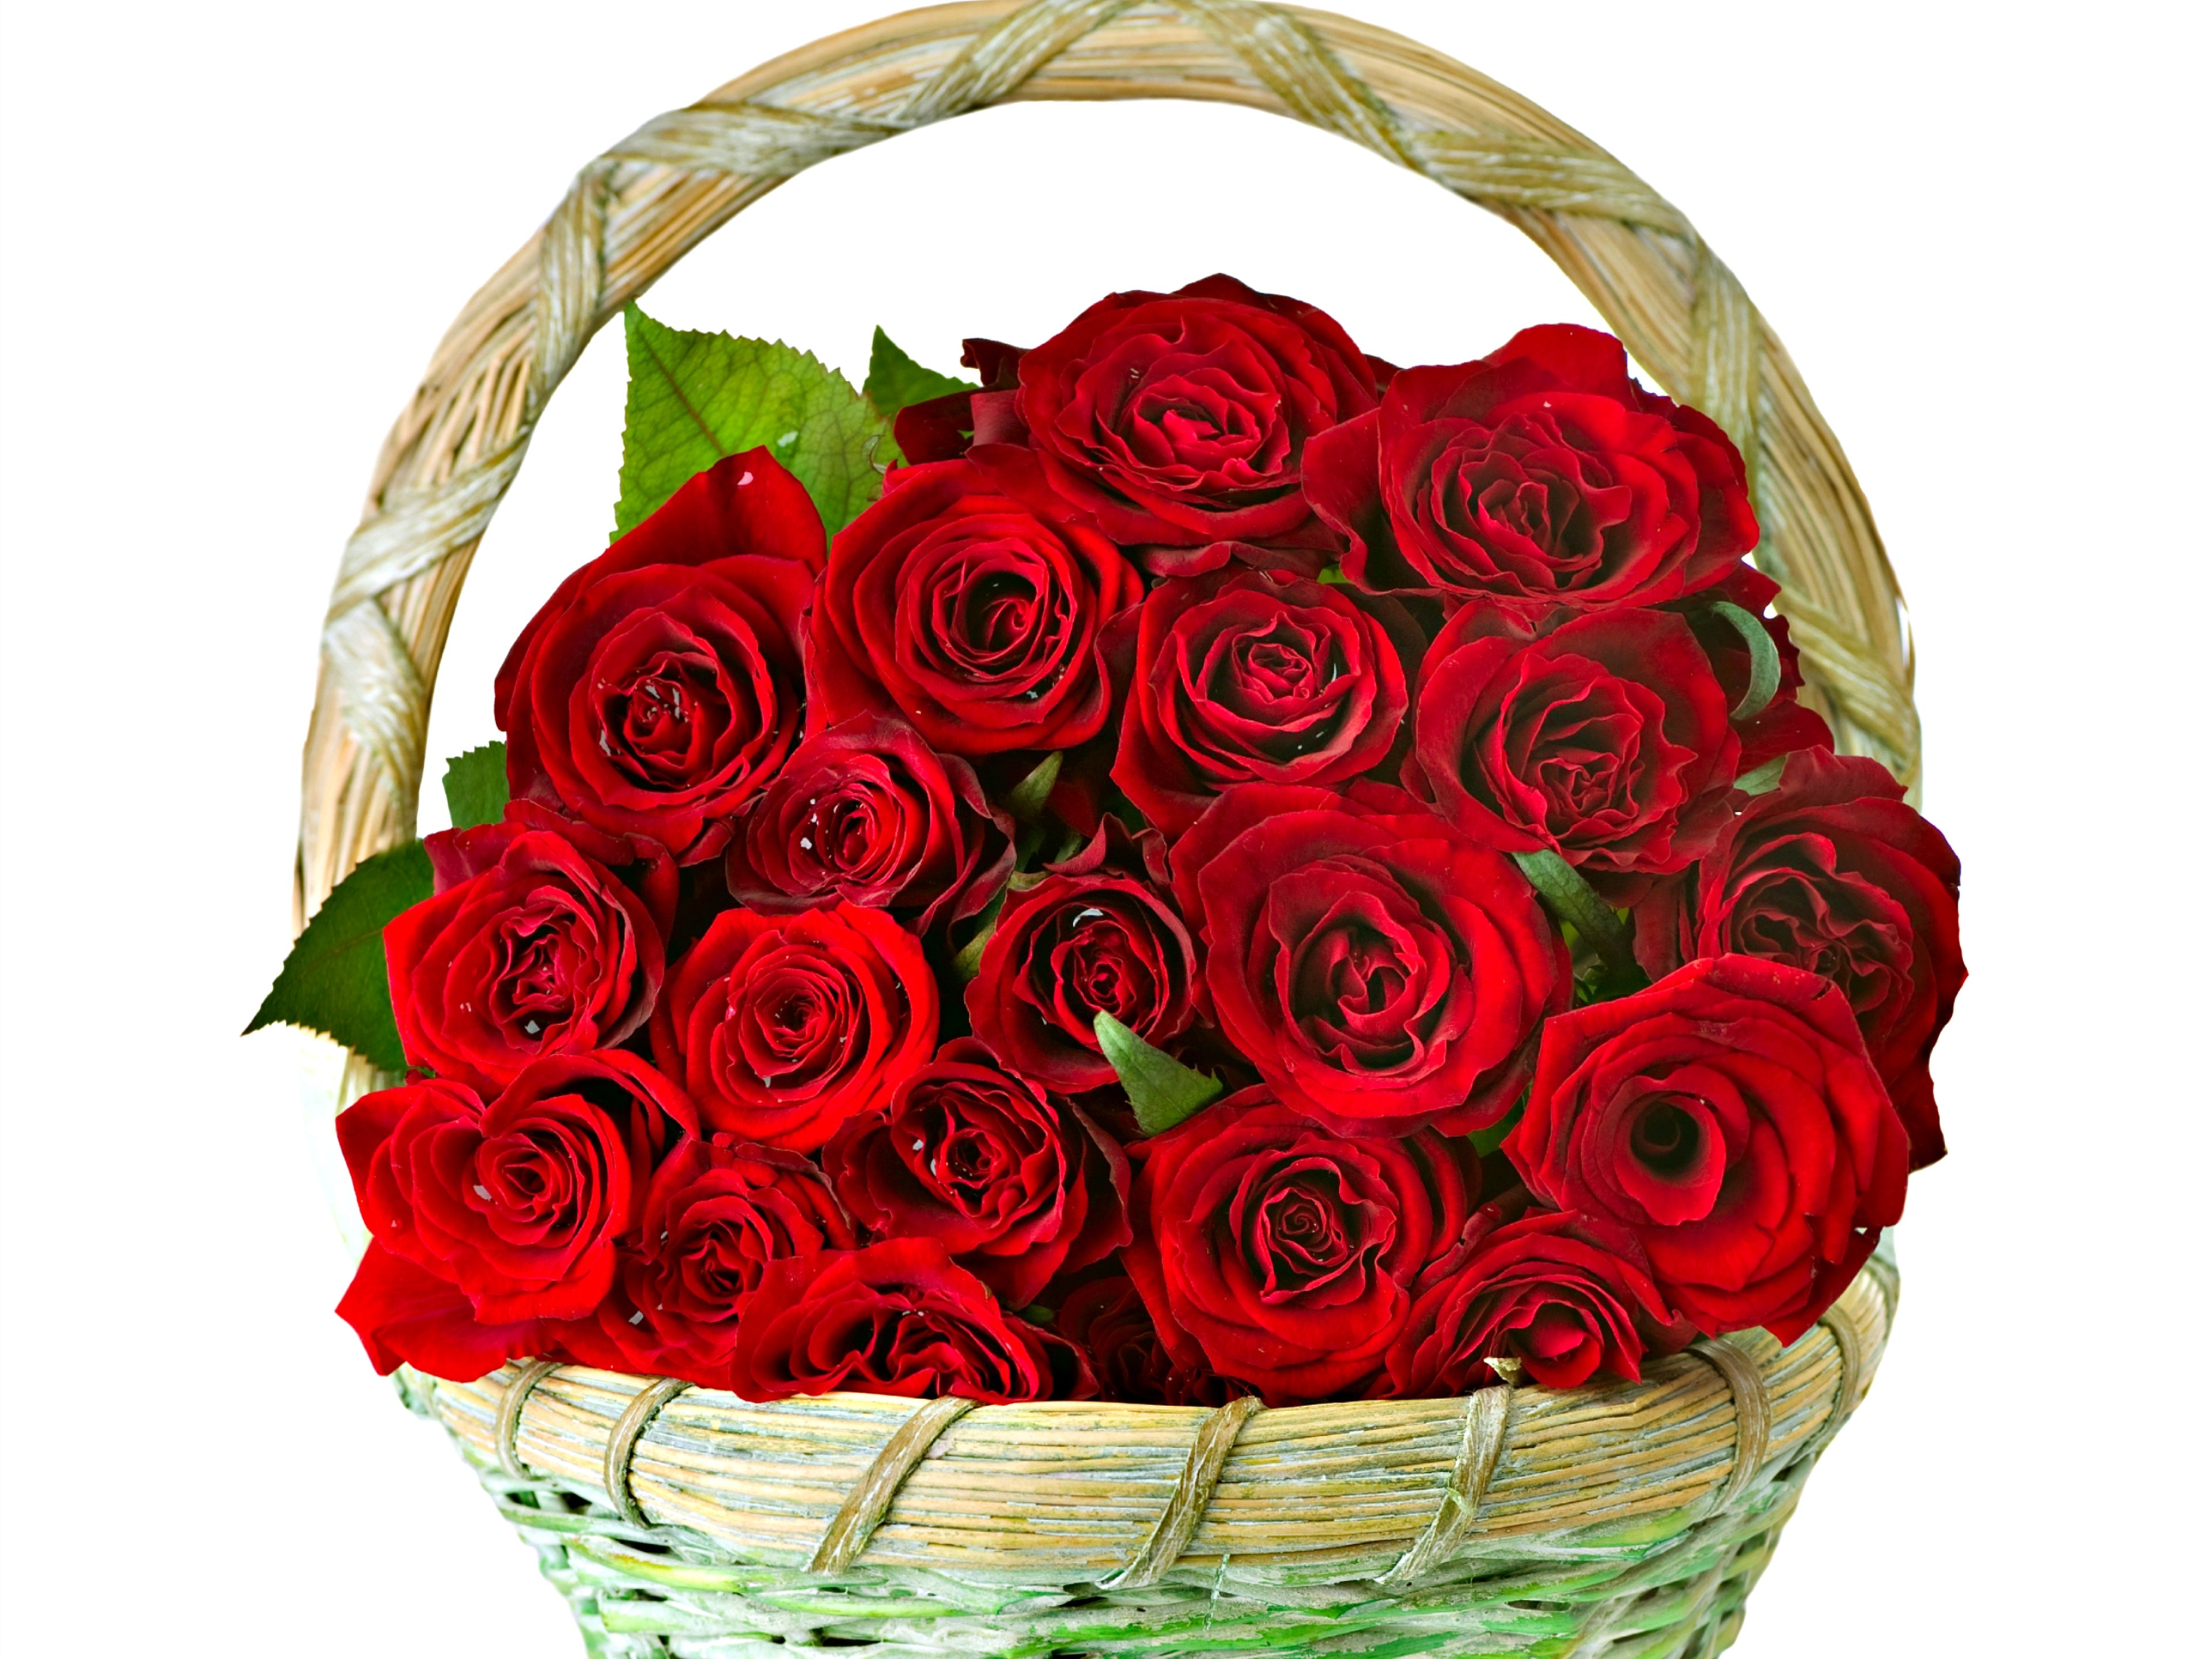 roses, Flowers, Bouquet, Basket, Love, Romance, Life, Happiness, Couple